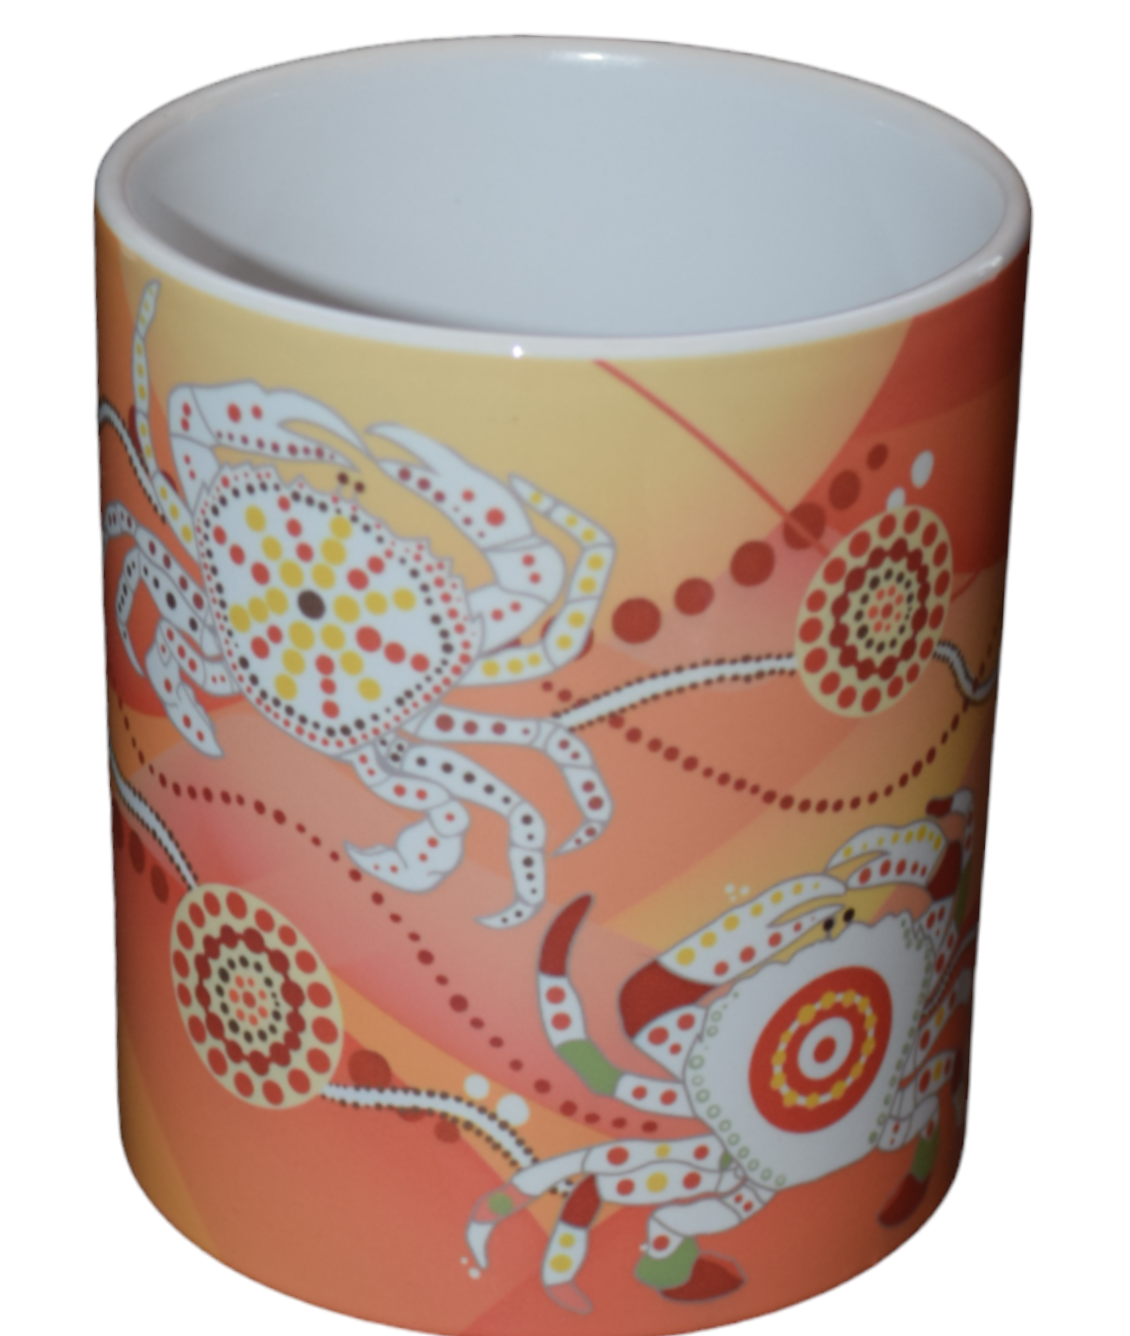 Coffee Cup Aboriginal Bulurru indigenous Tea Mug Drink CRABS